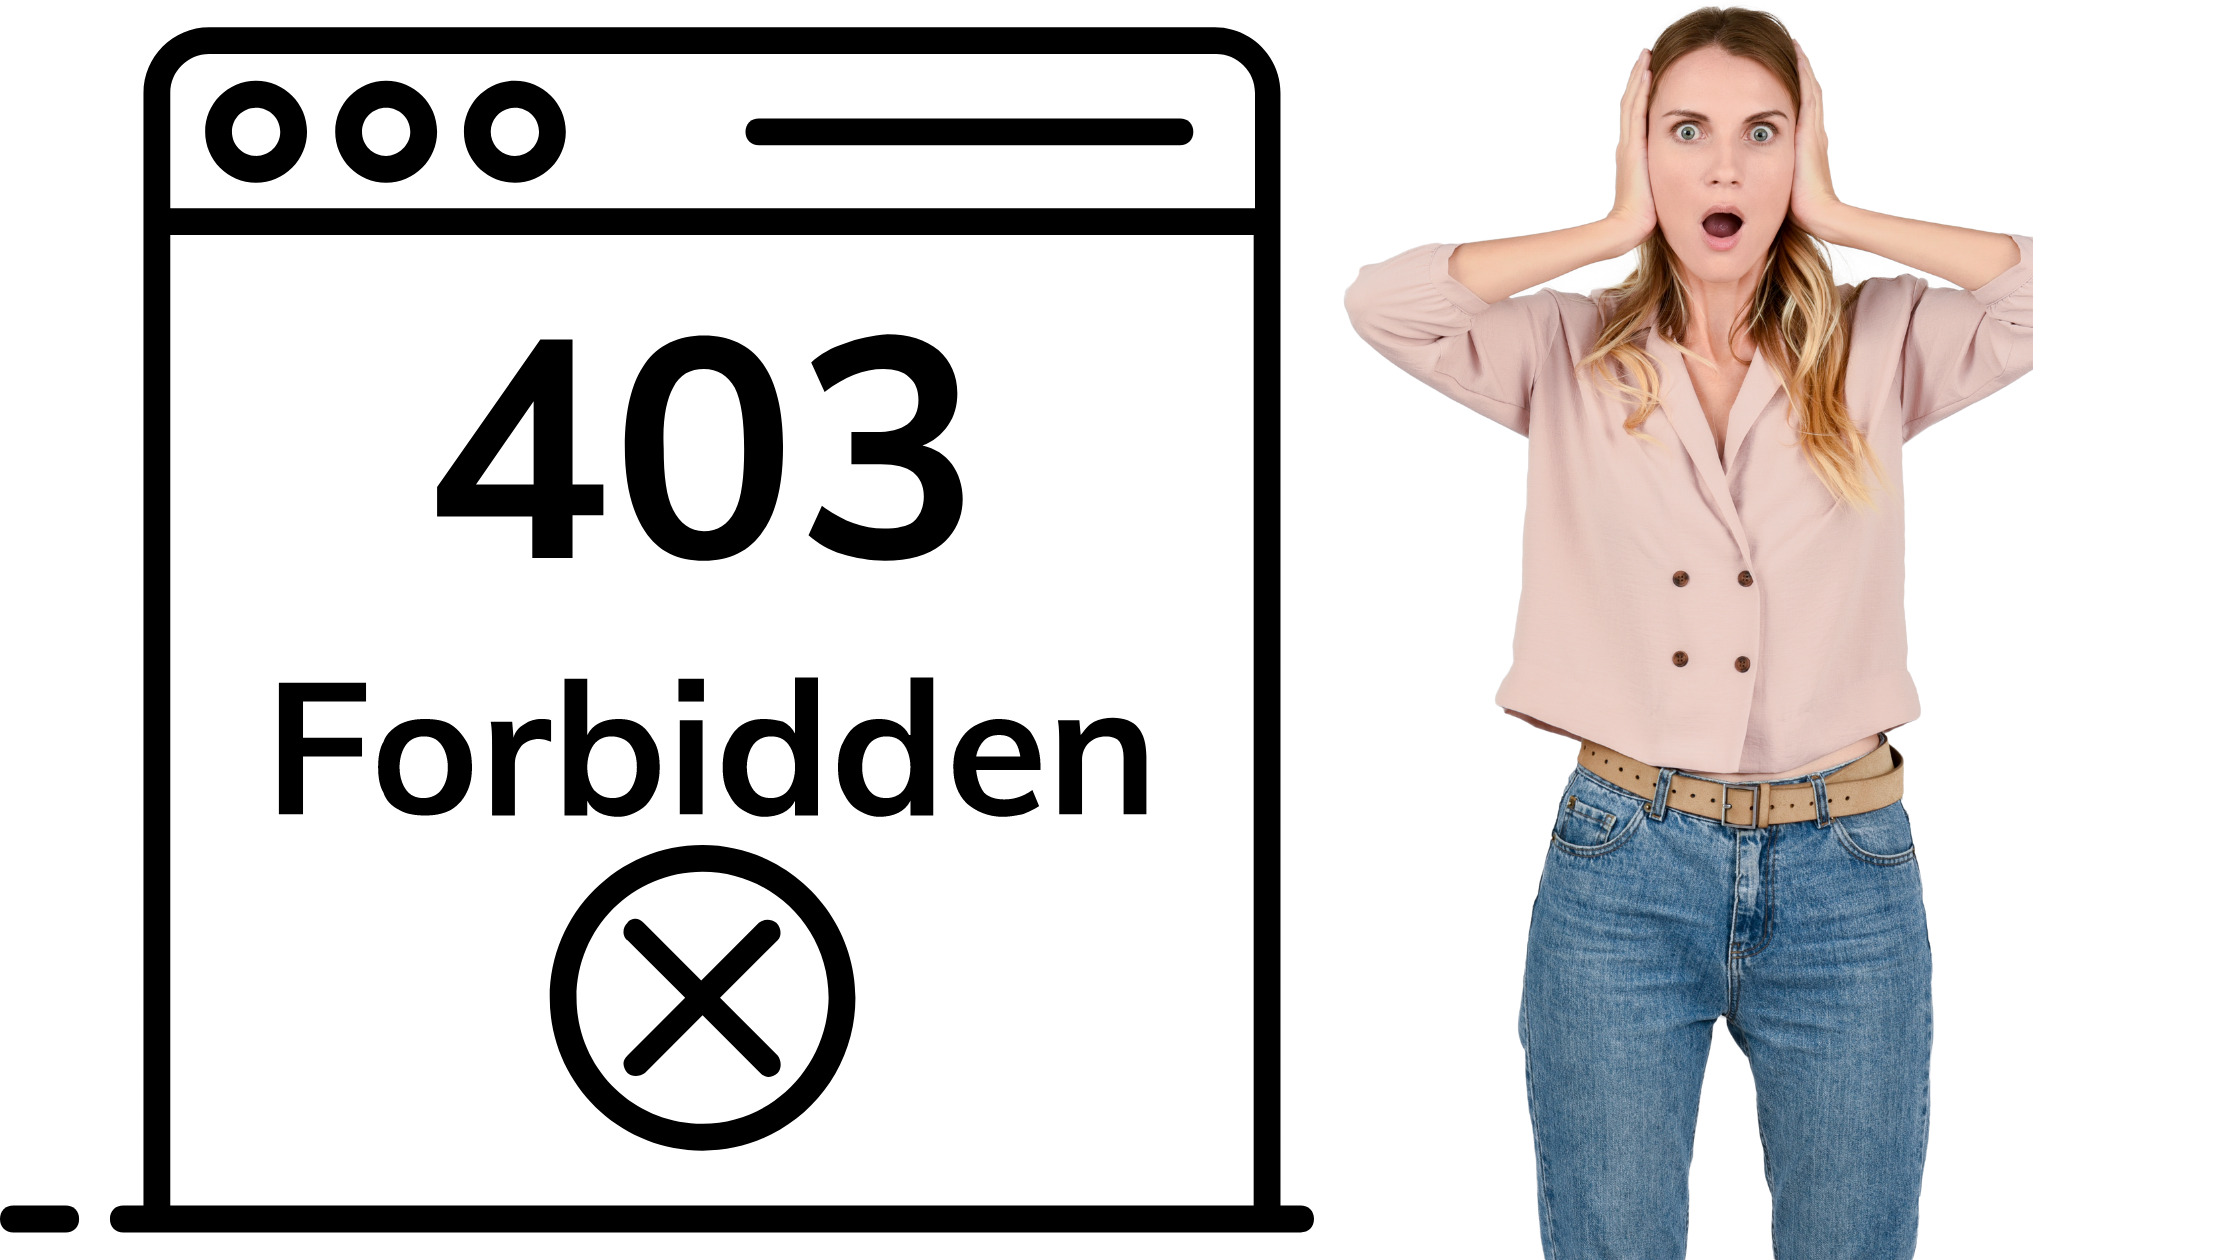 403 Forbidden